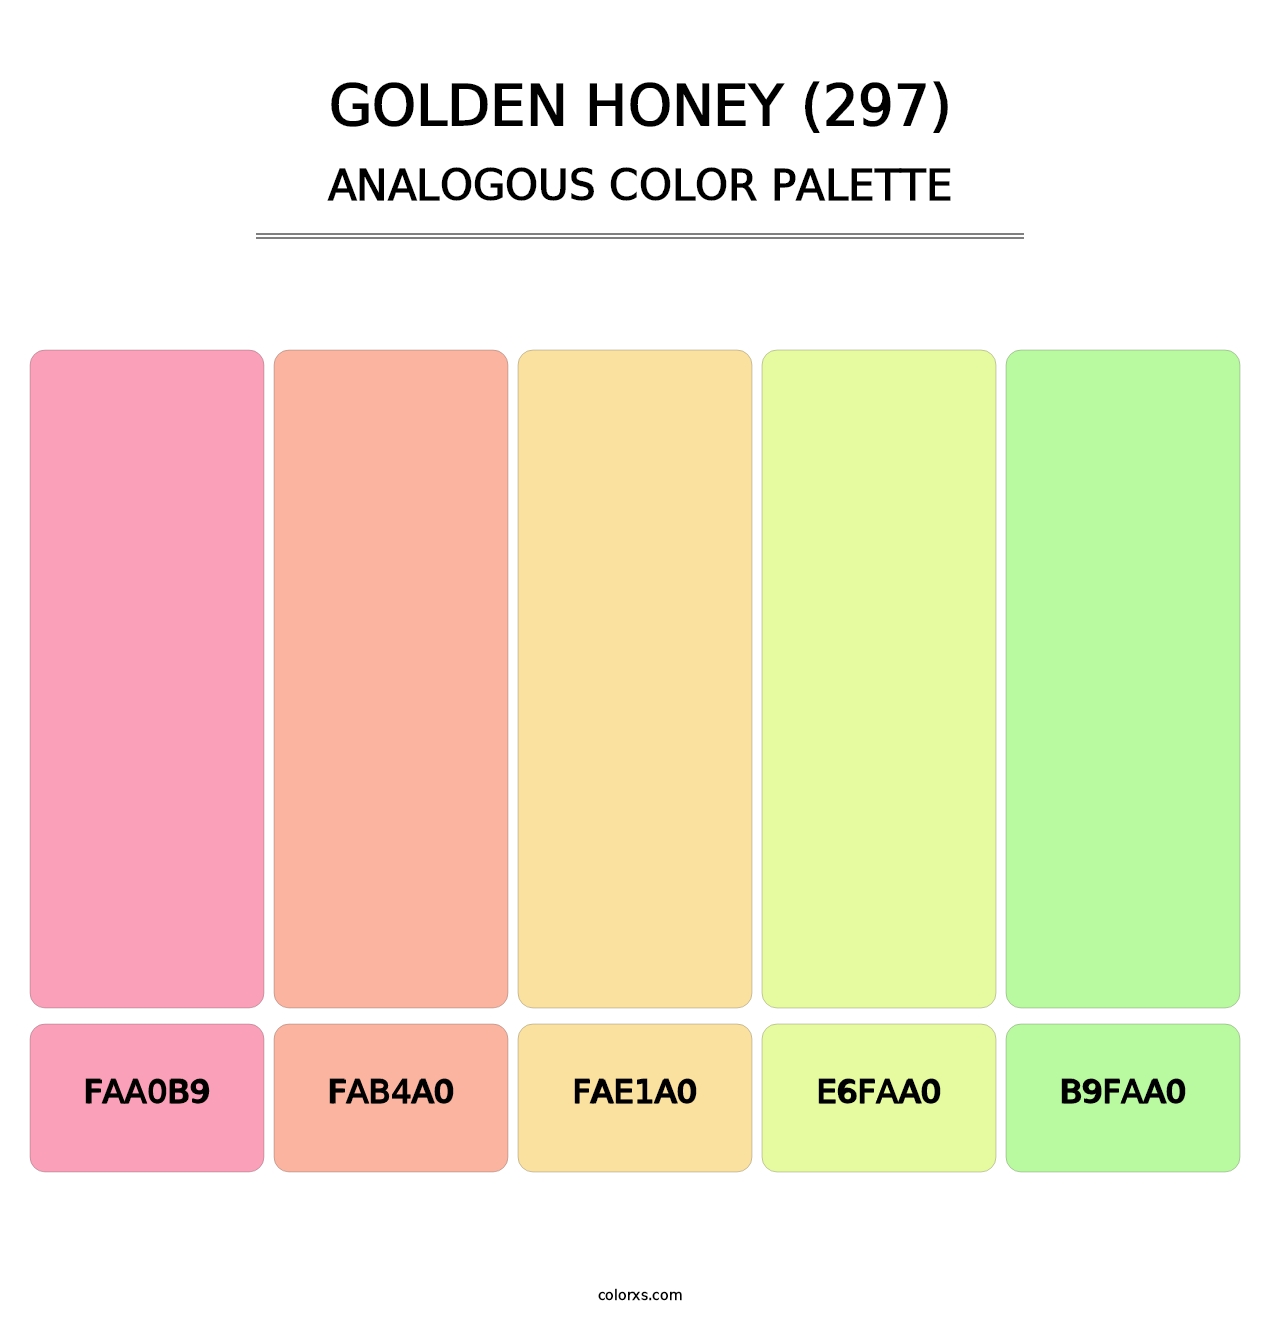 Golden Honey (297) - Analogous Color Palette